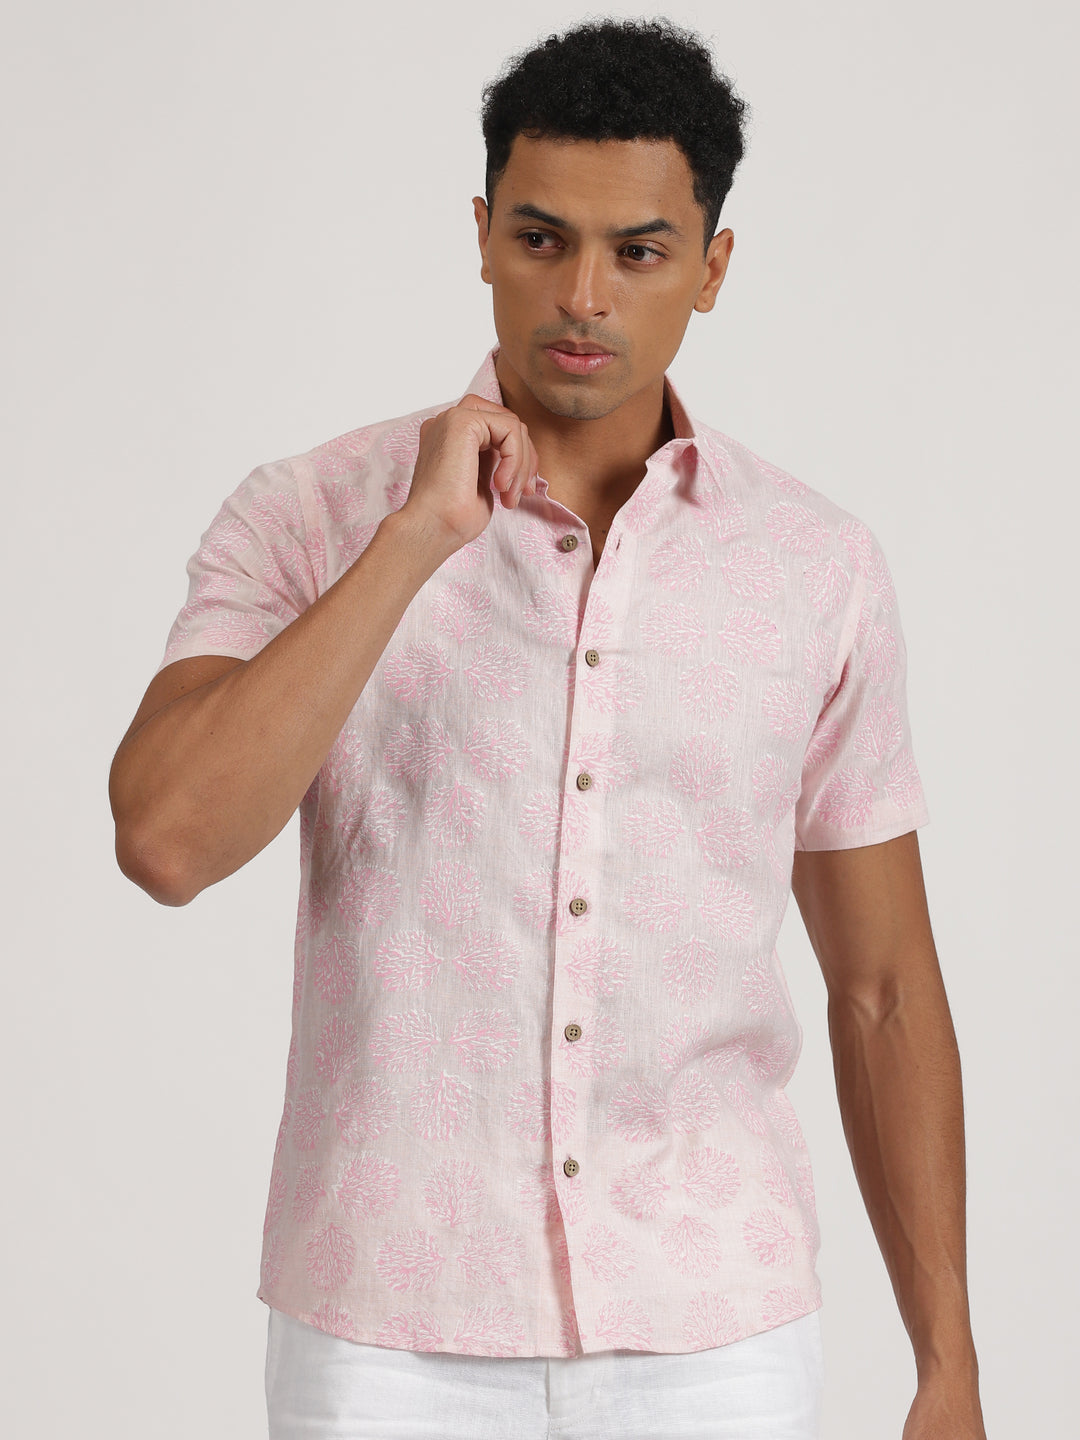 Island Blush Look | Light Pink Hand Block Printed Shirt & Pure White Trousers